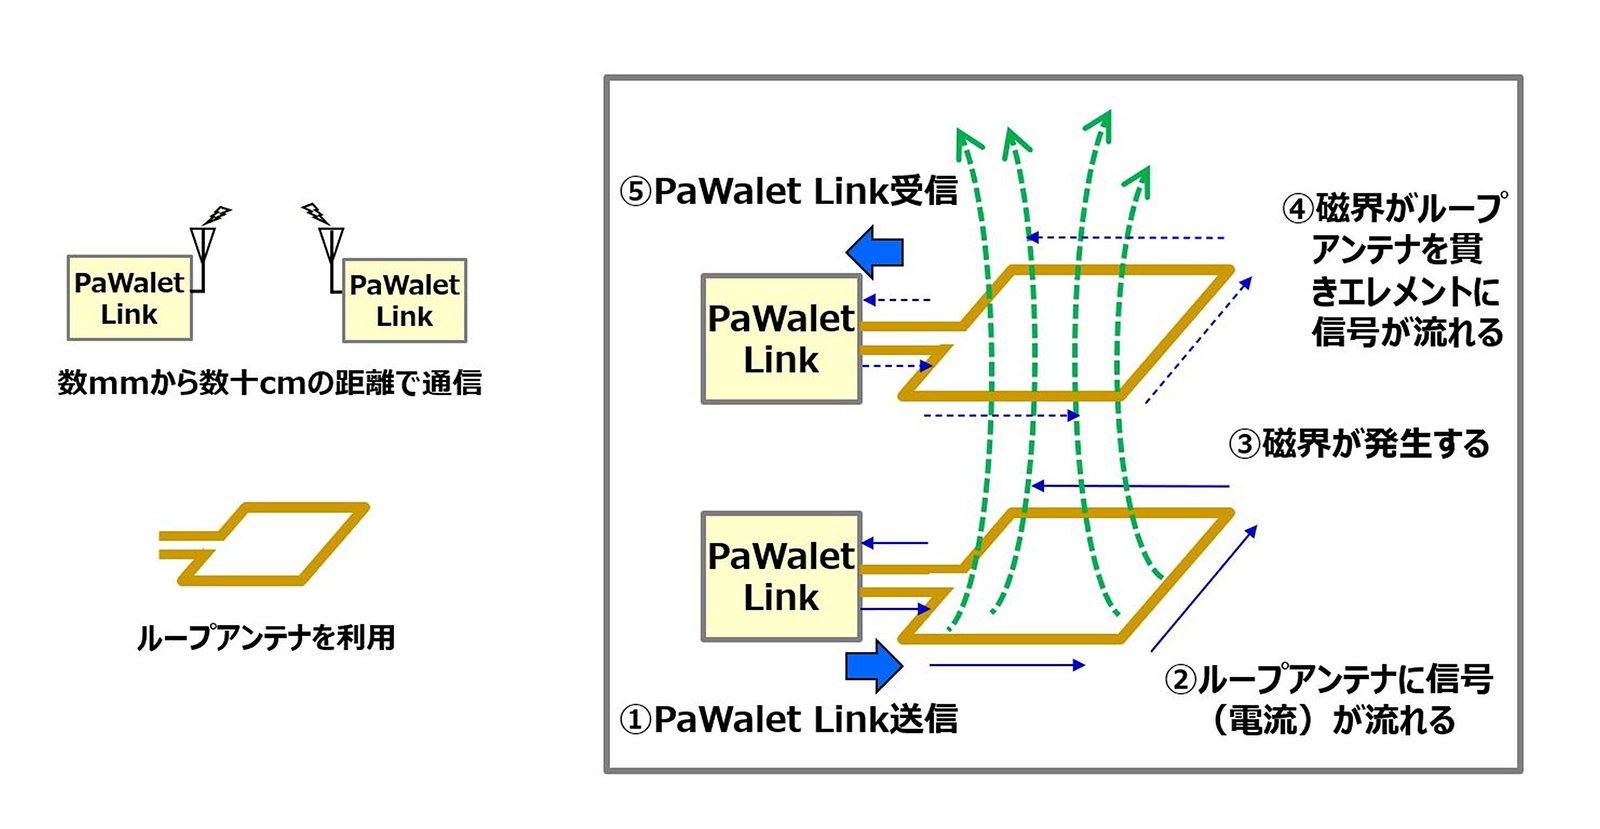 PaWalet Linkの概要説明図